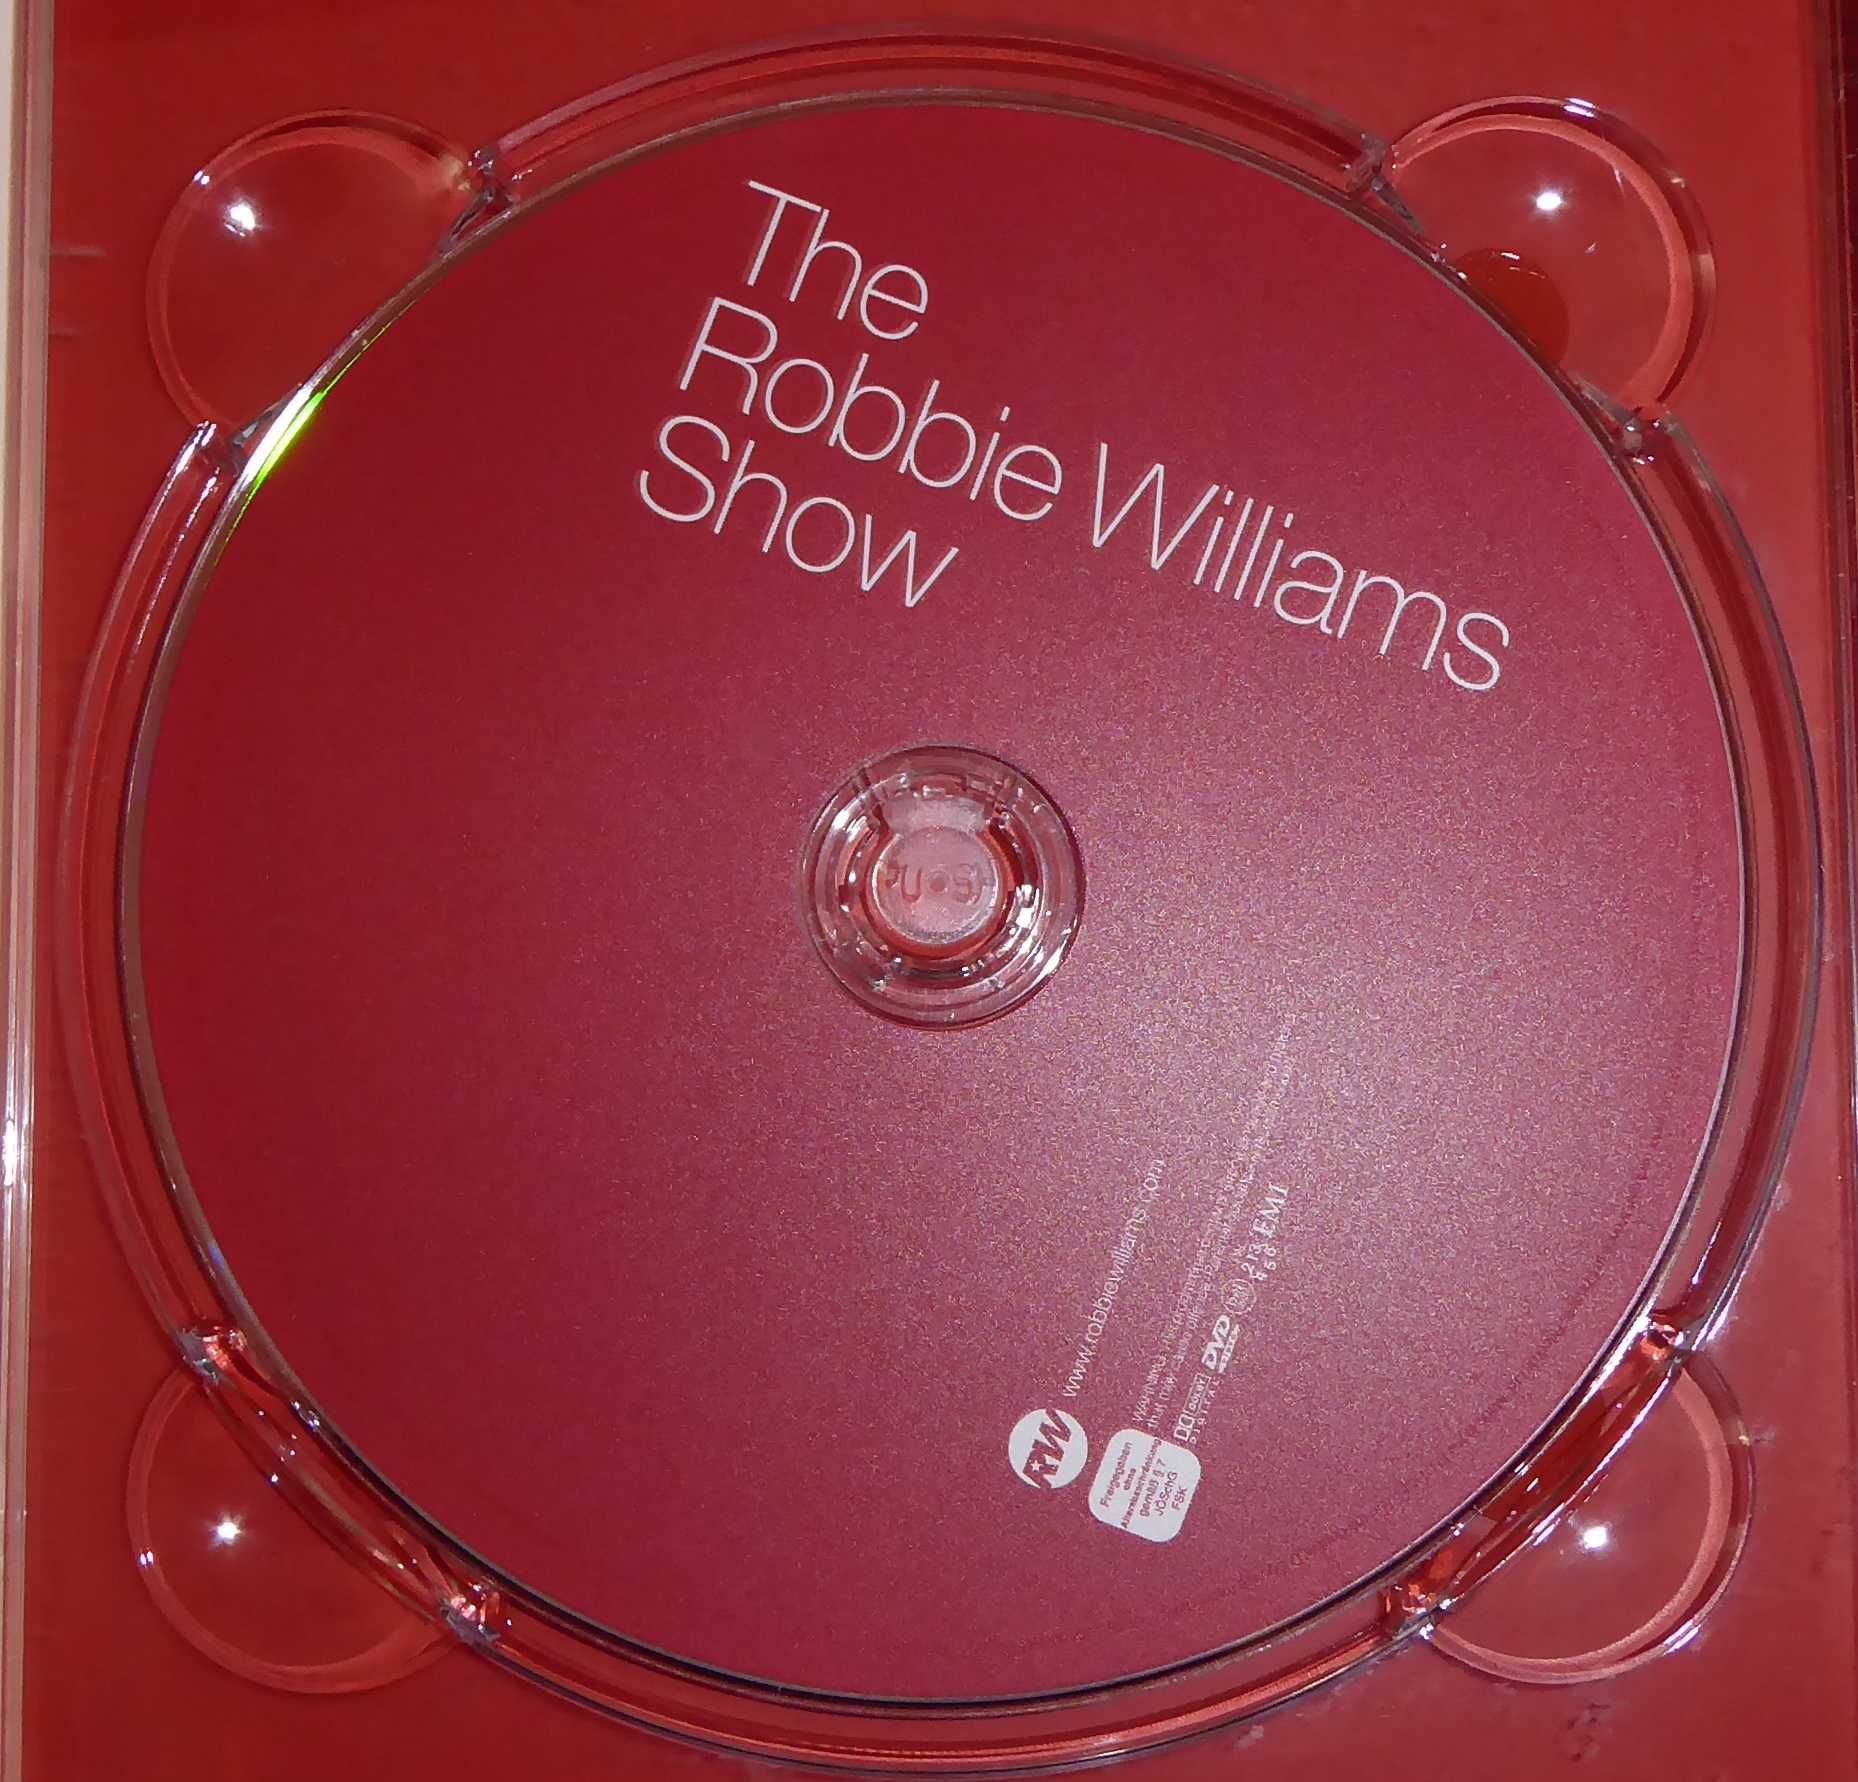 The Robbie WILIAMS Show DVD